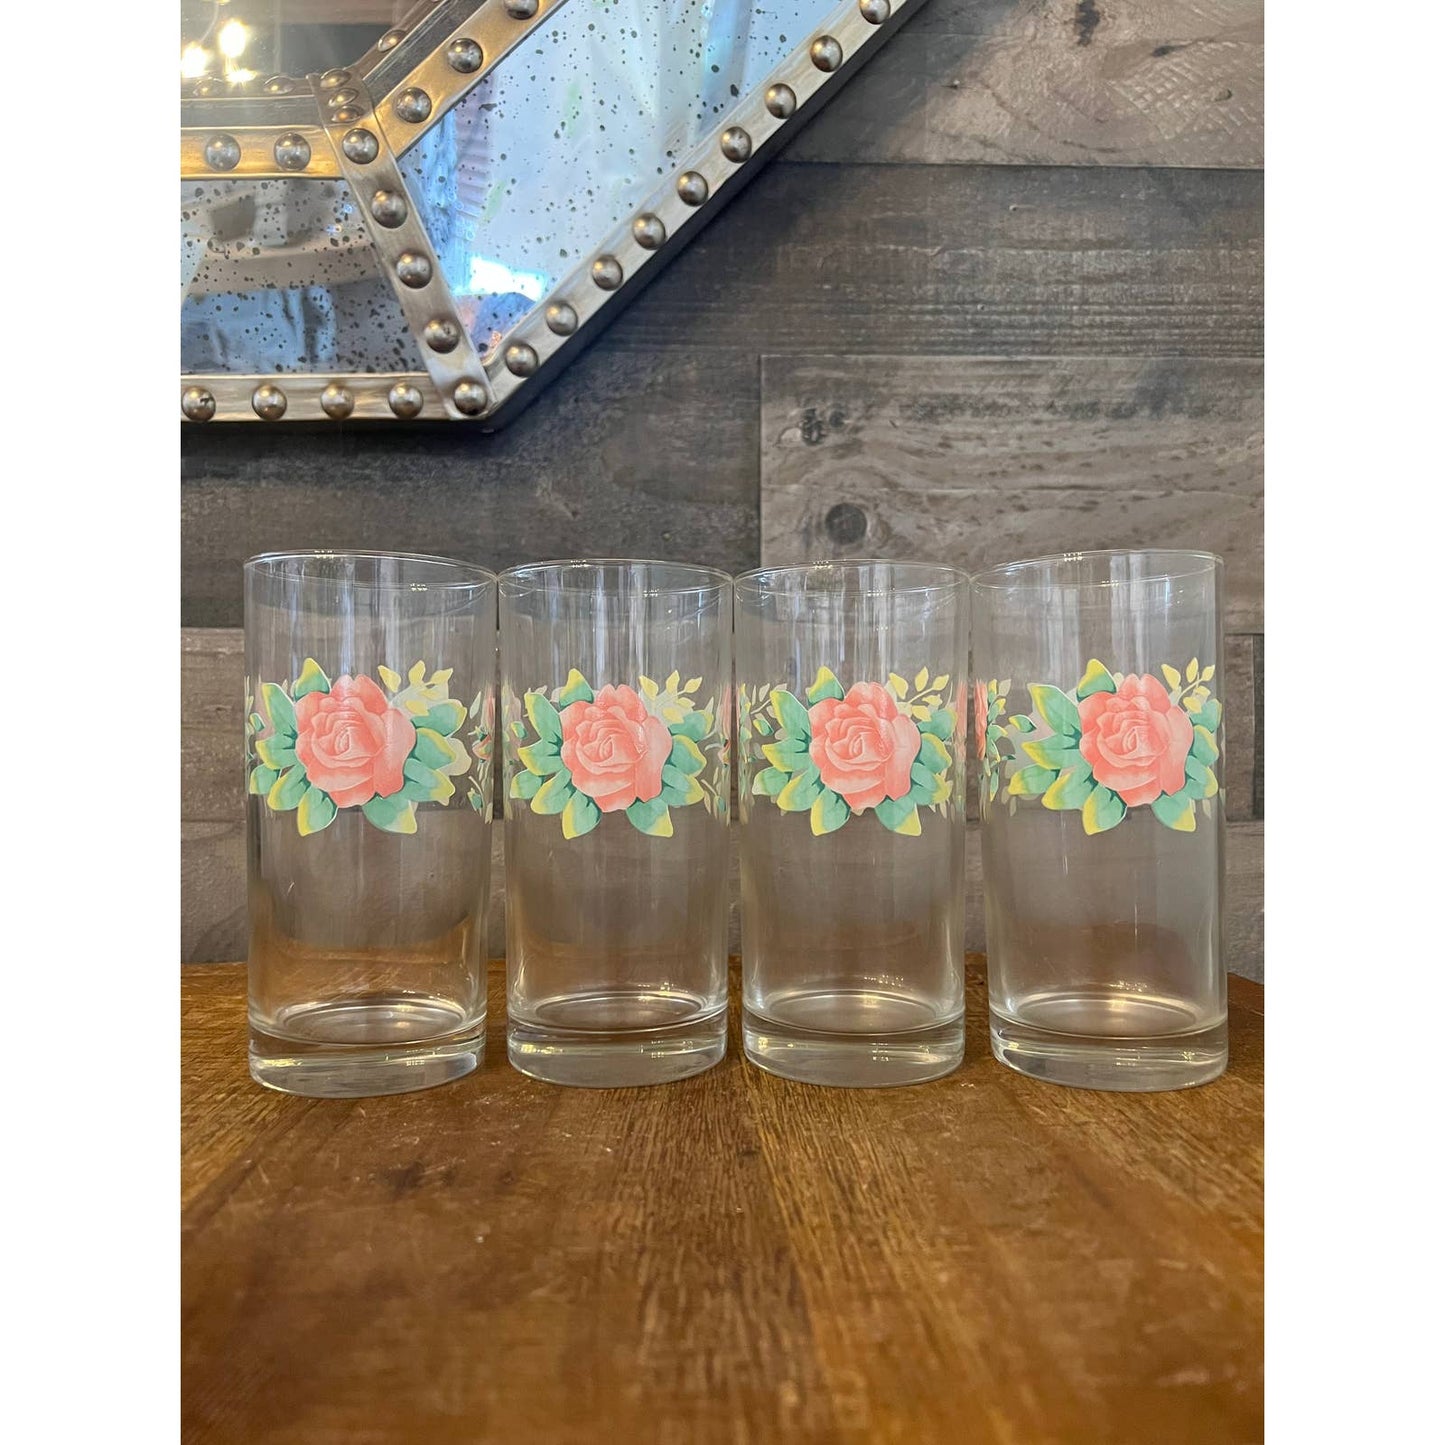 NIB vintage set of 4 Corelle elegant rose pattern 16oz cooler glasses - new in box Corelle glasses - spring tall glass floral tumblers